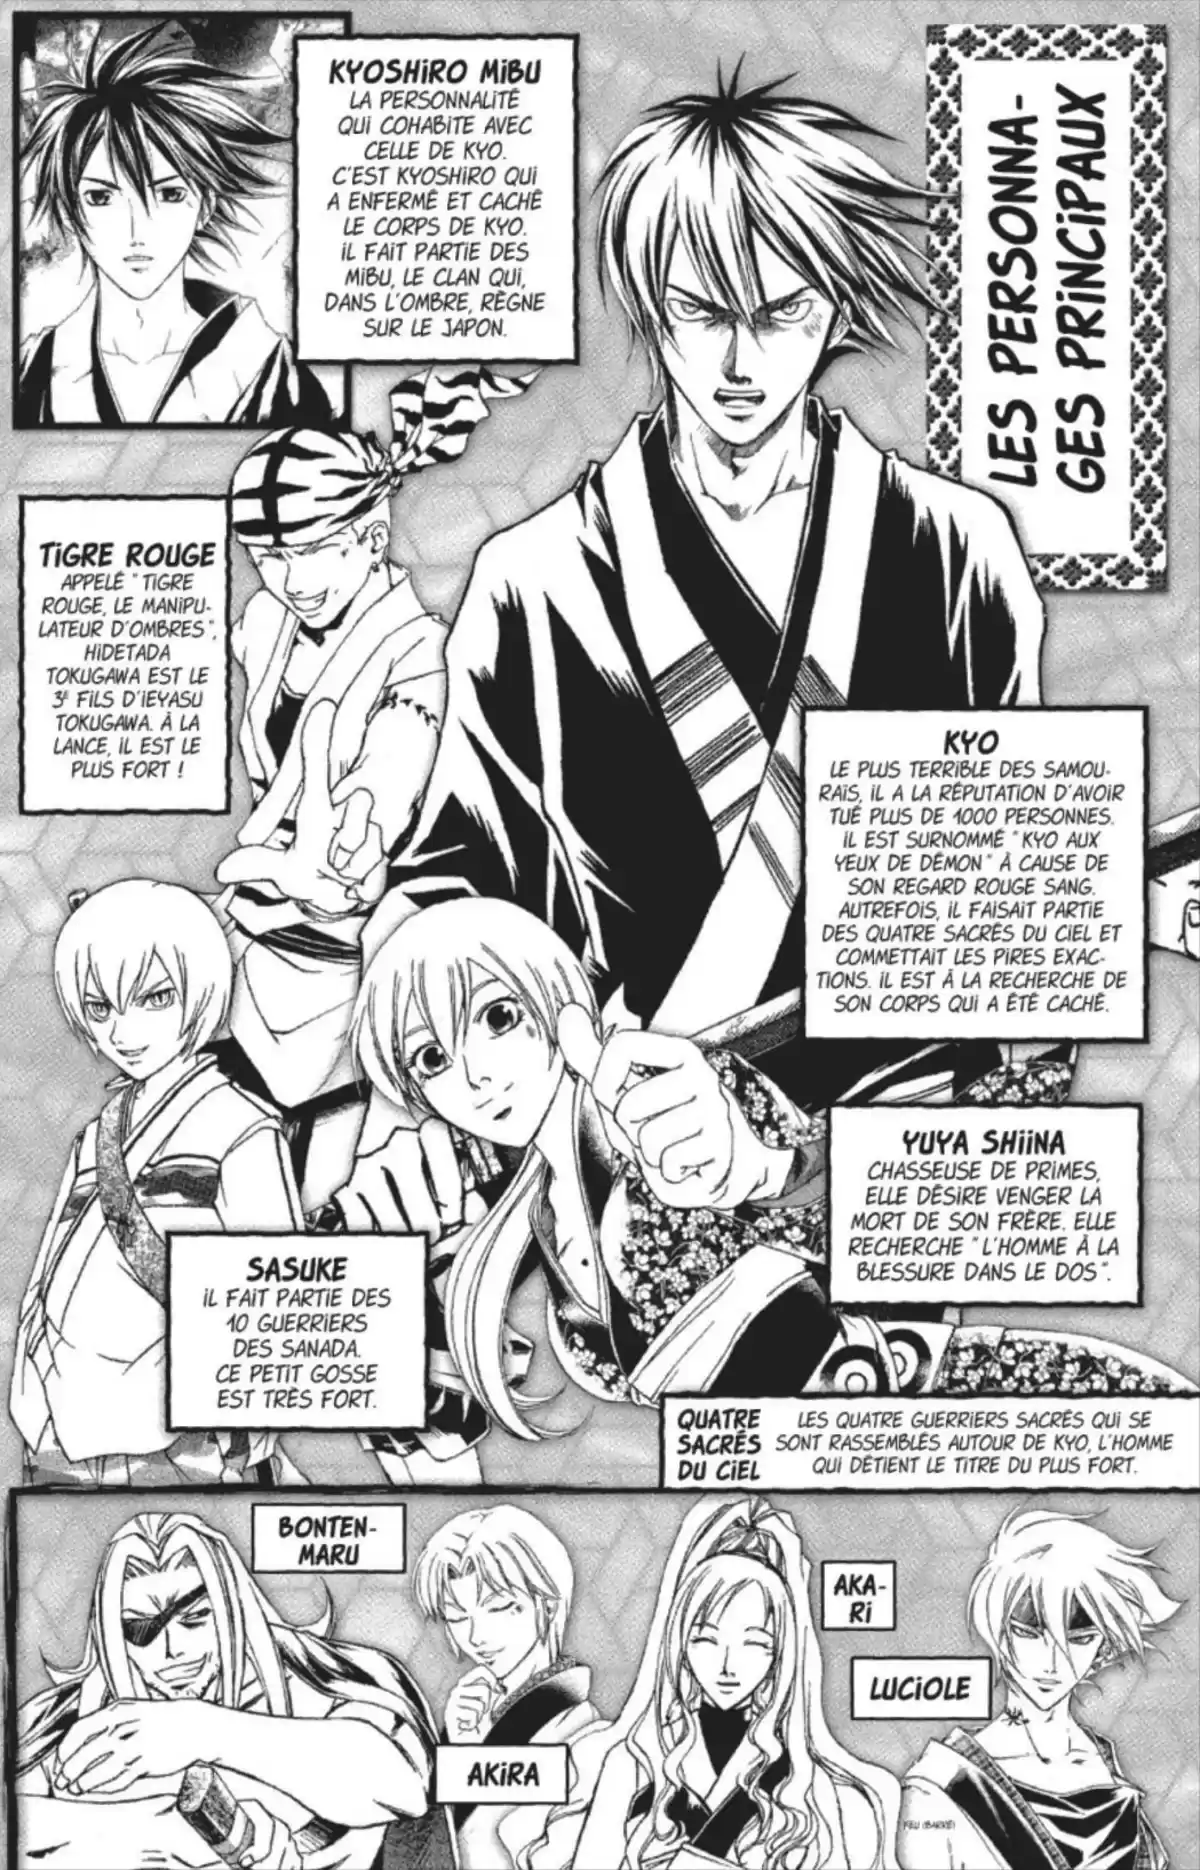 Samurai Deeper Kyo Volume 30 page 3